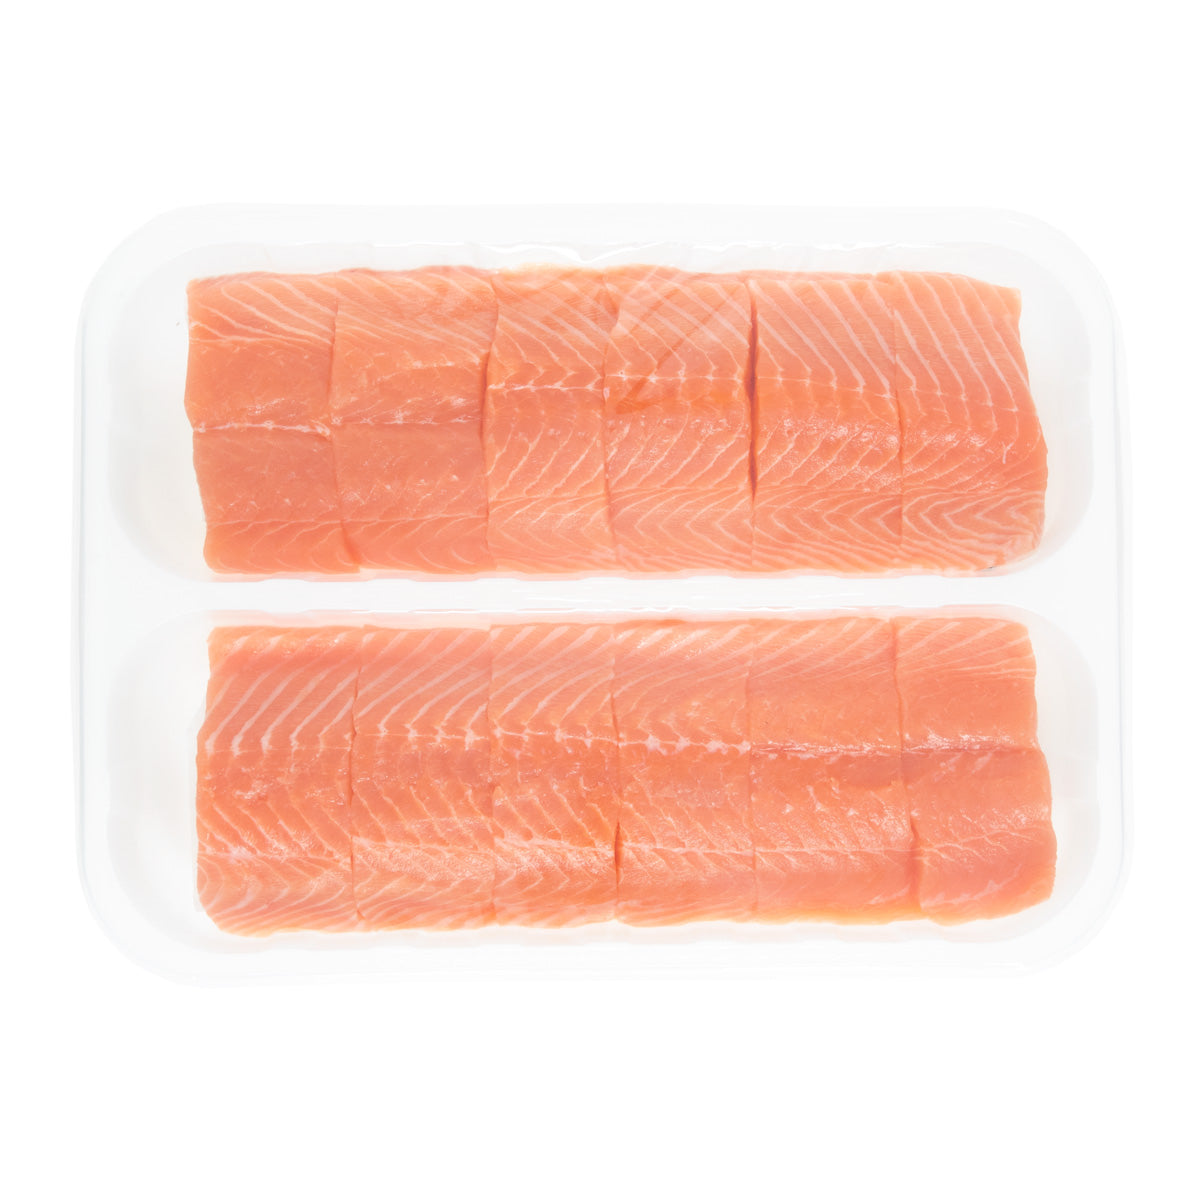 Pierless Fish Farm Raised Skinless PBO Scottish Salmon 6 oz 6 OZ